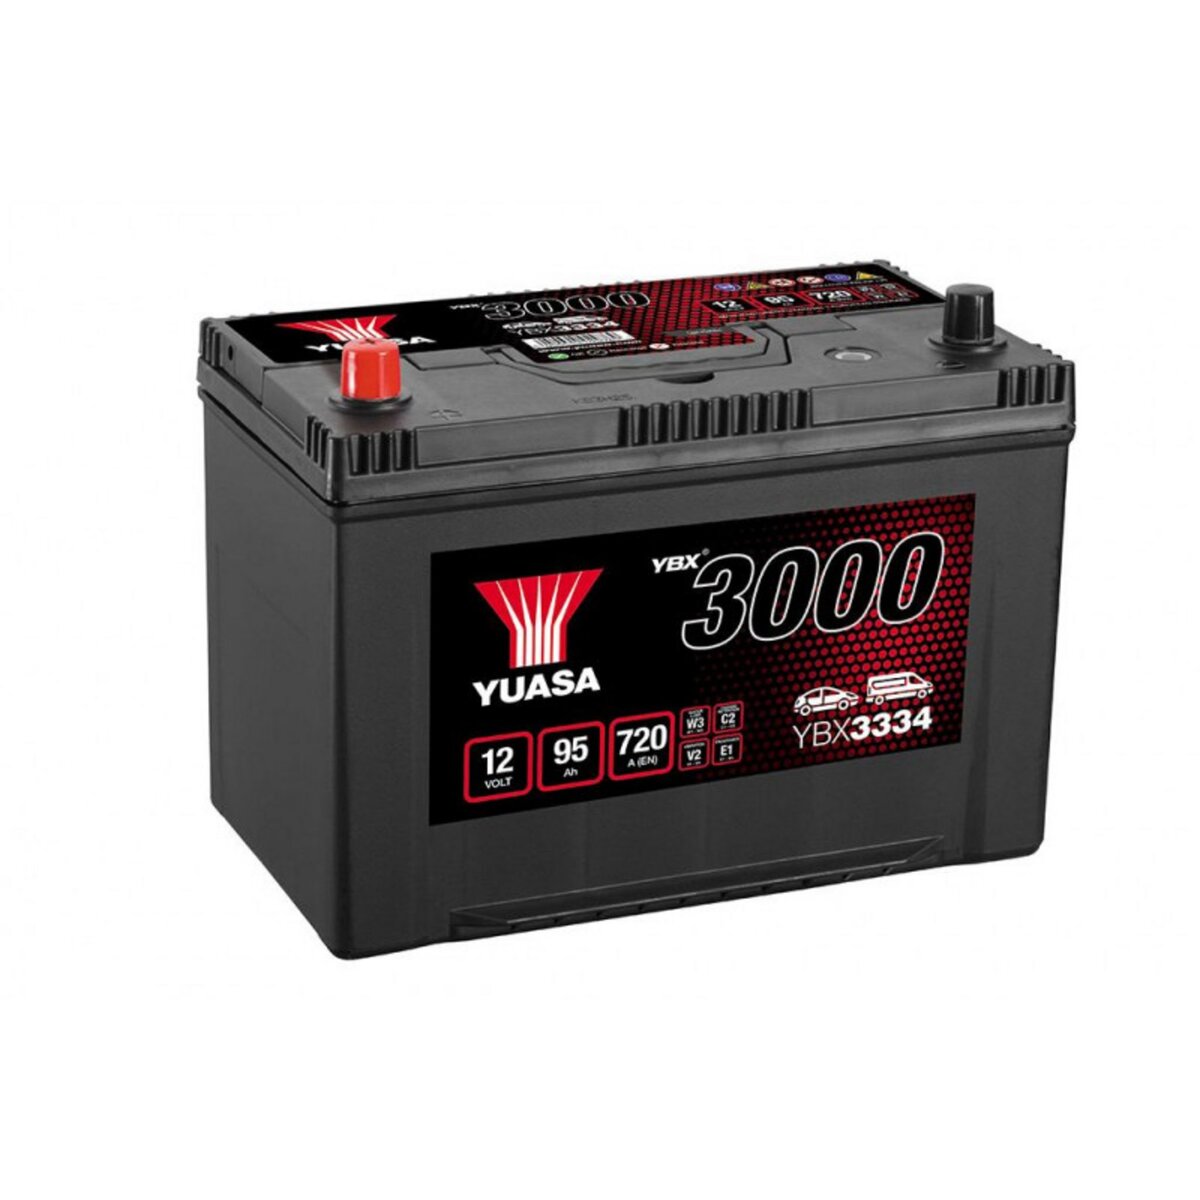 YUASA Batterie Yuasa SMF YBX3334 12V 95ah 720A